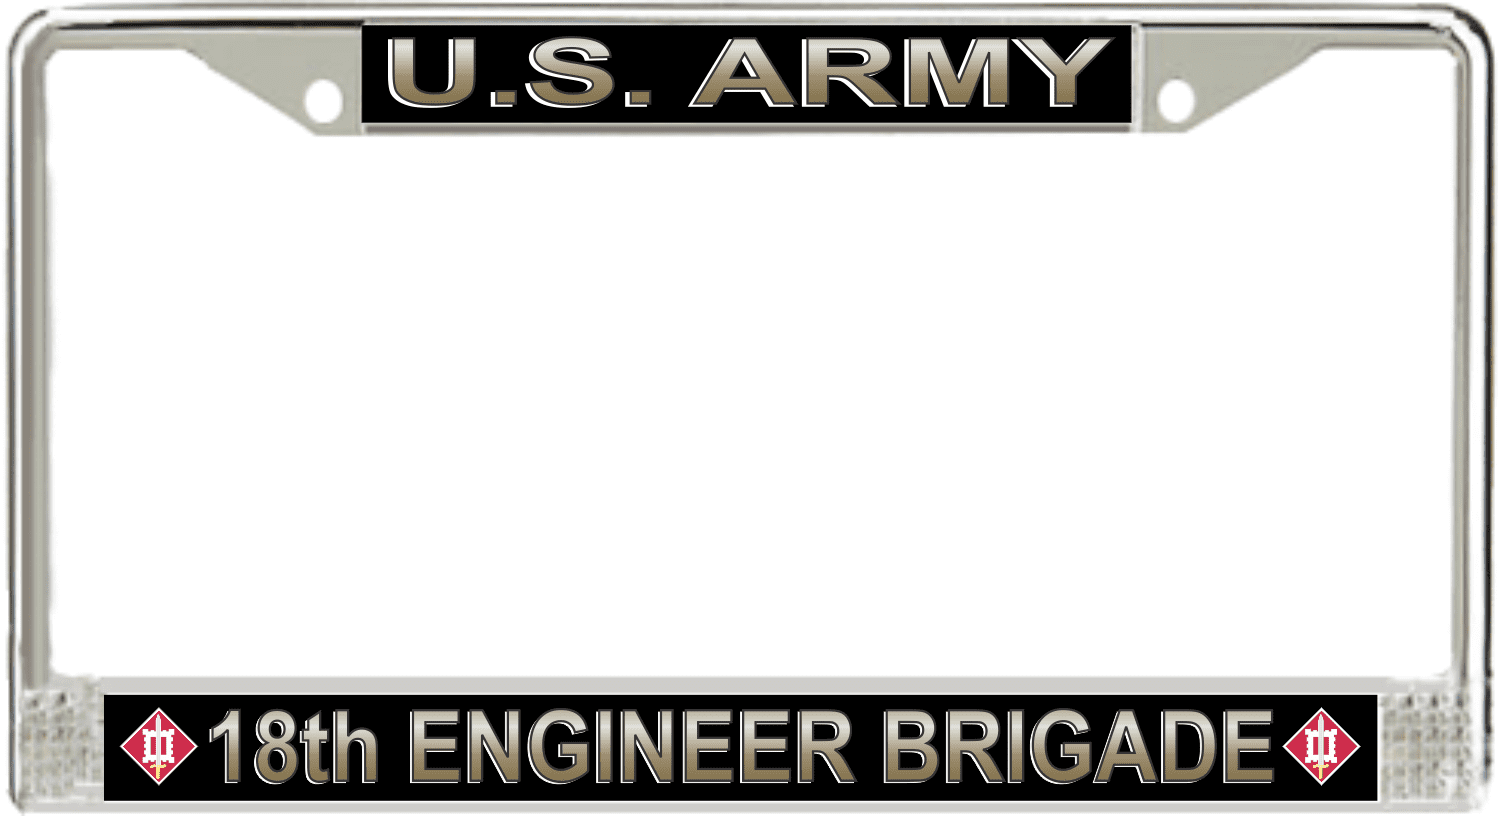 US Army 18th Engineer Brigade Aluminum License plate 